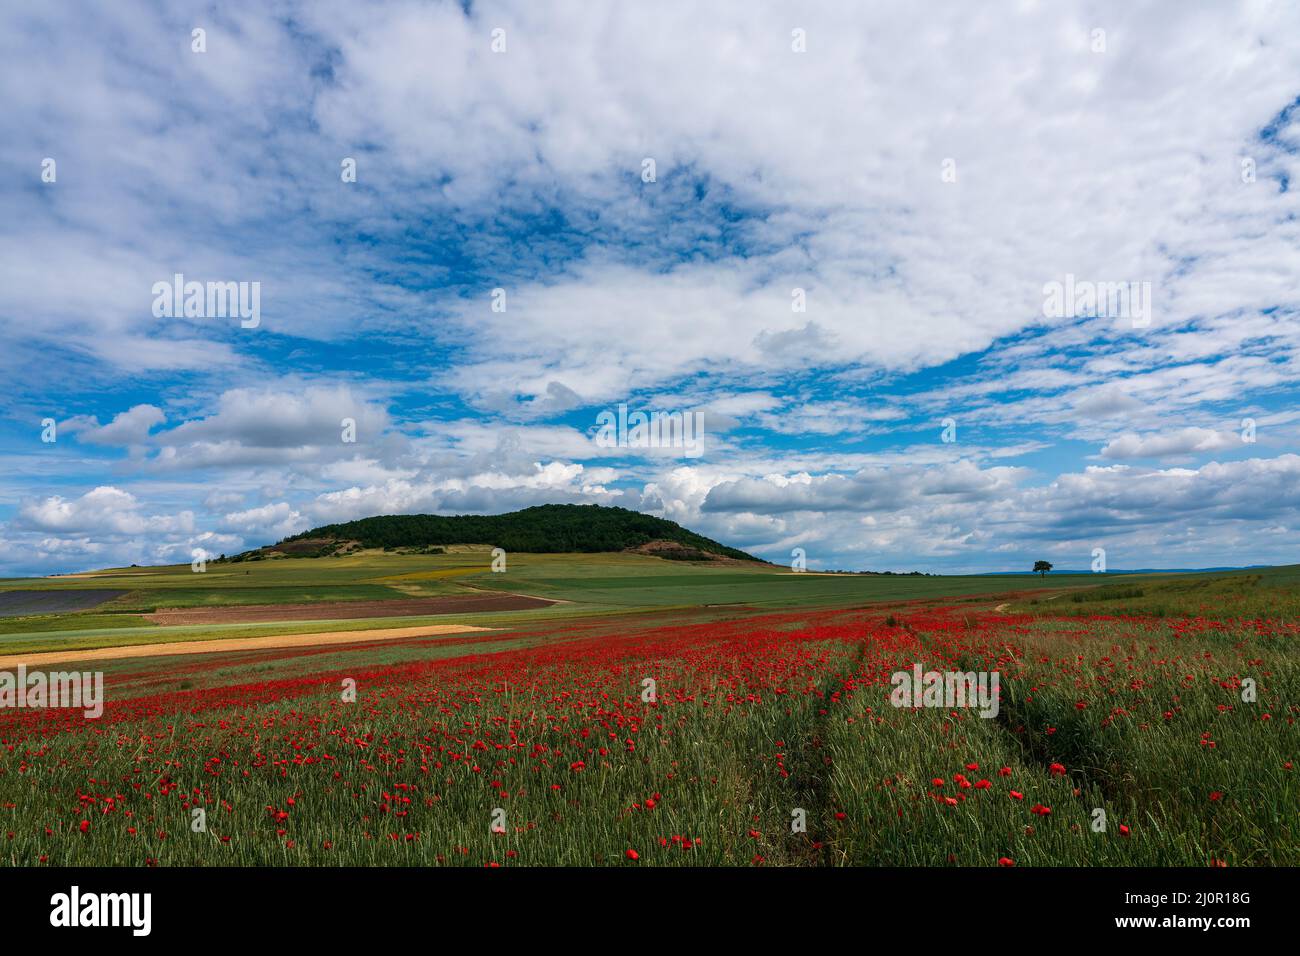 Landscape shot with poppy field Stock Photo